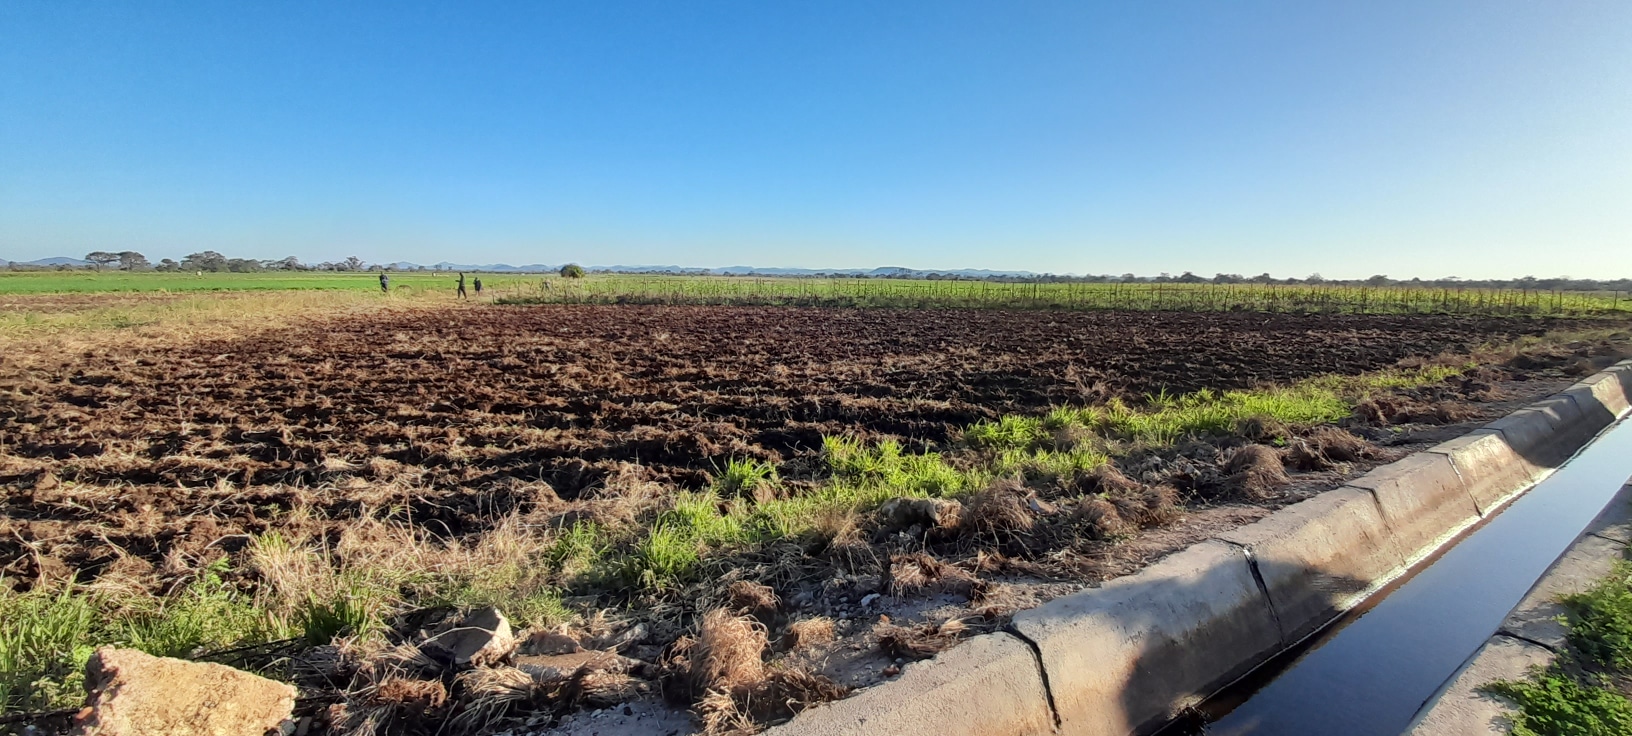 Mushandike Irrigation Scheme shelters community from climate shocks